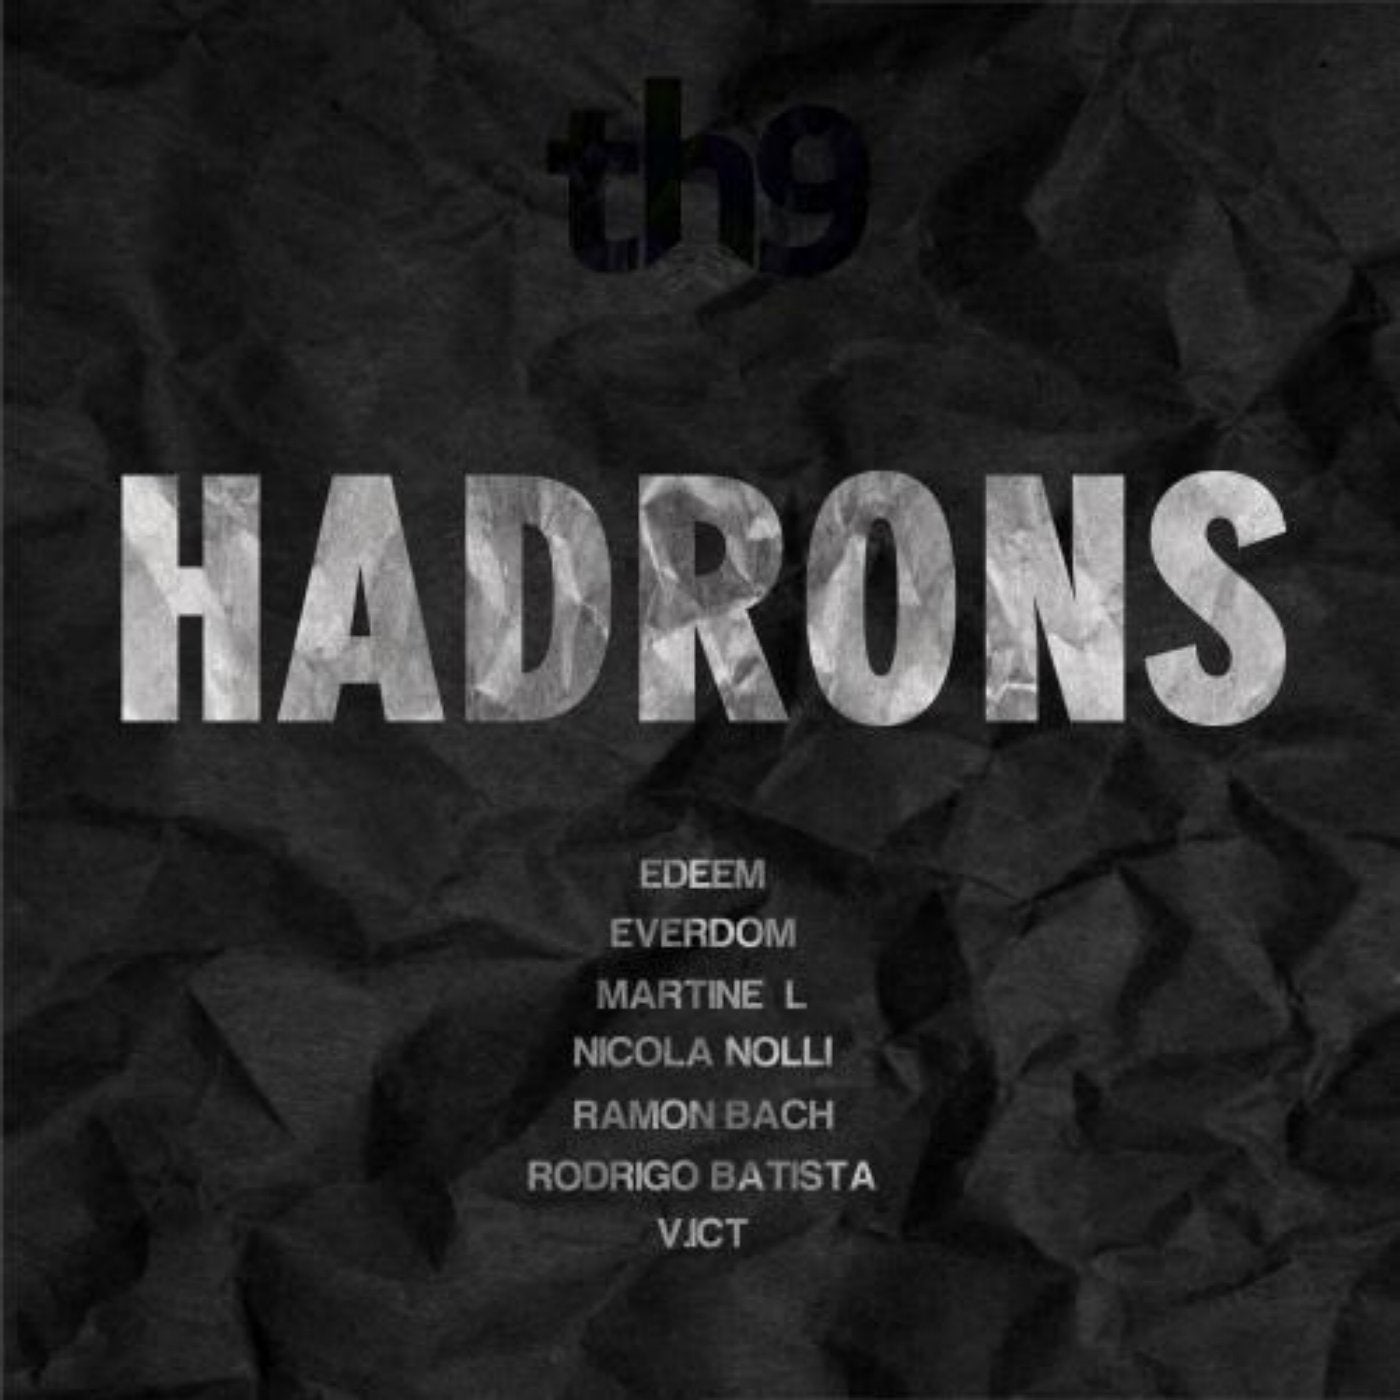 Hadrons